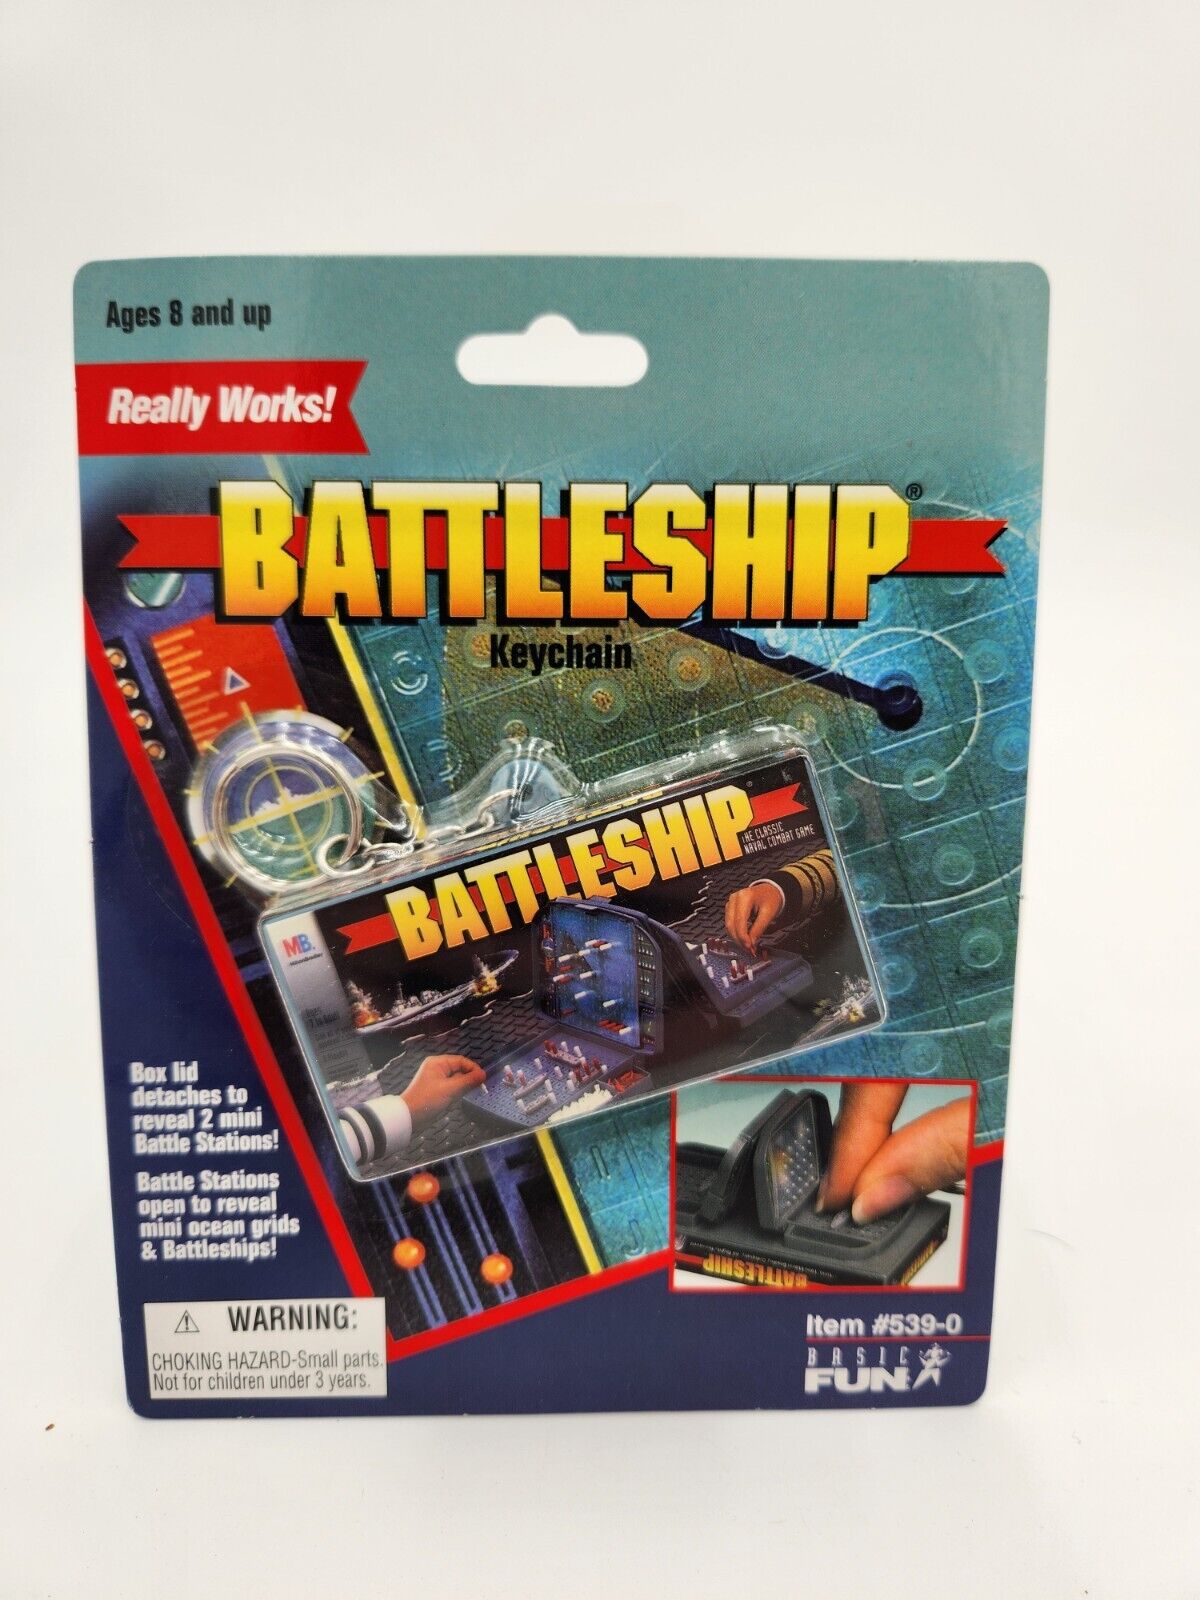 1999 Battleship by Hasbro Mini Keychain Board Game Basic Fun Sealed New